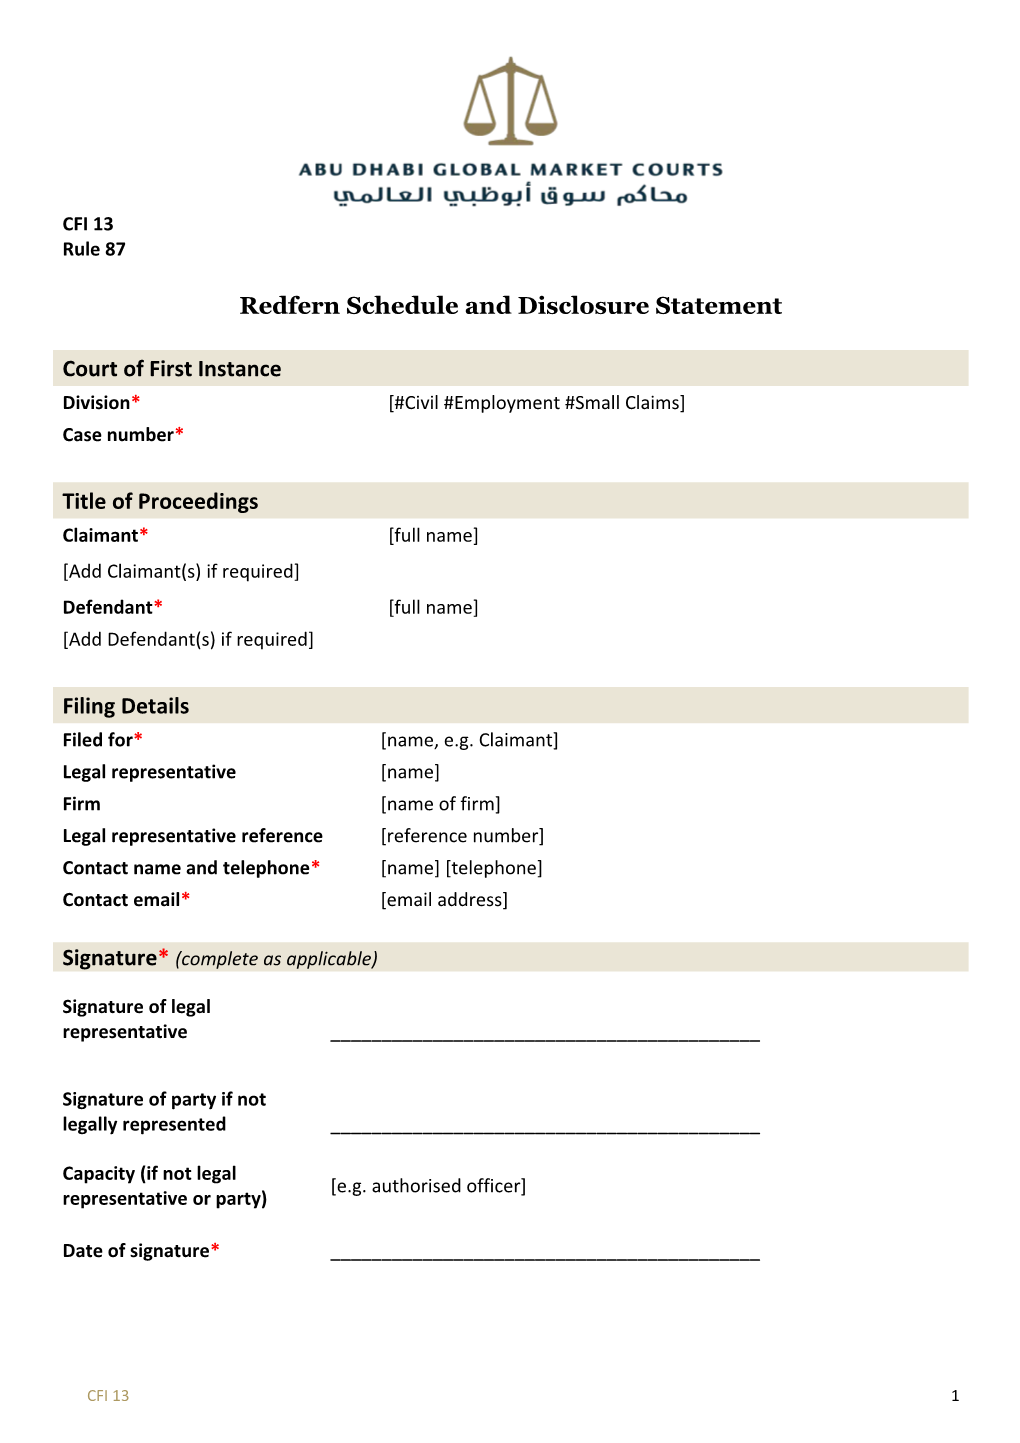 Redfern Schedule and Disclosure Statement